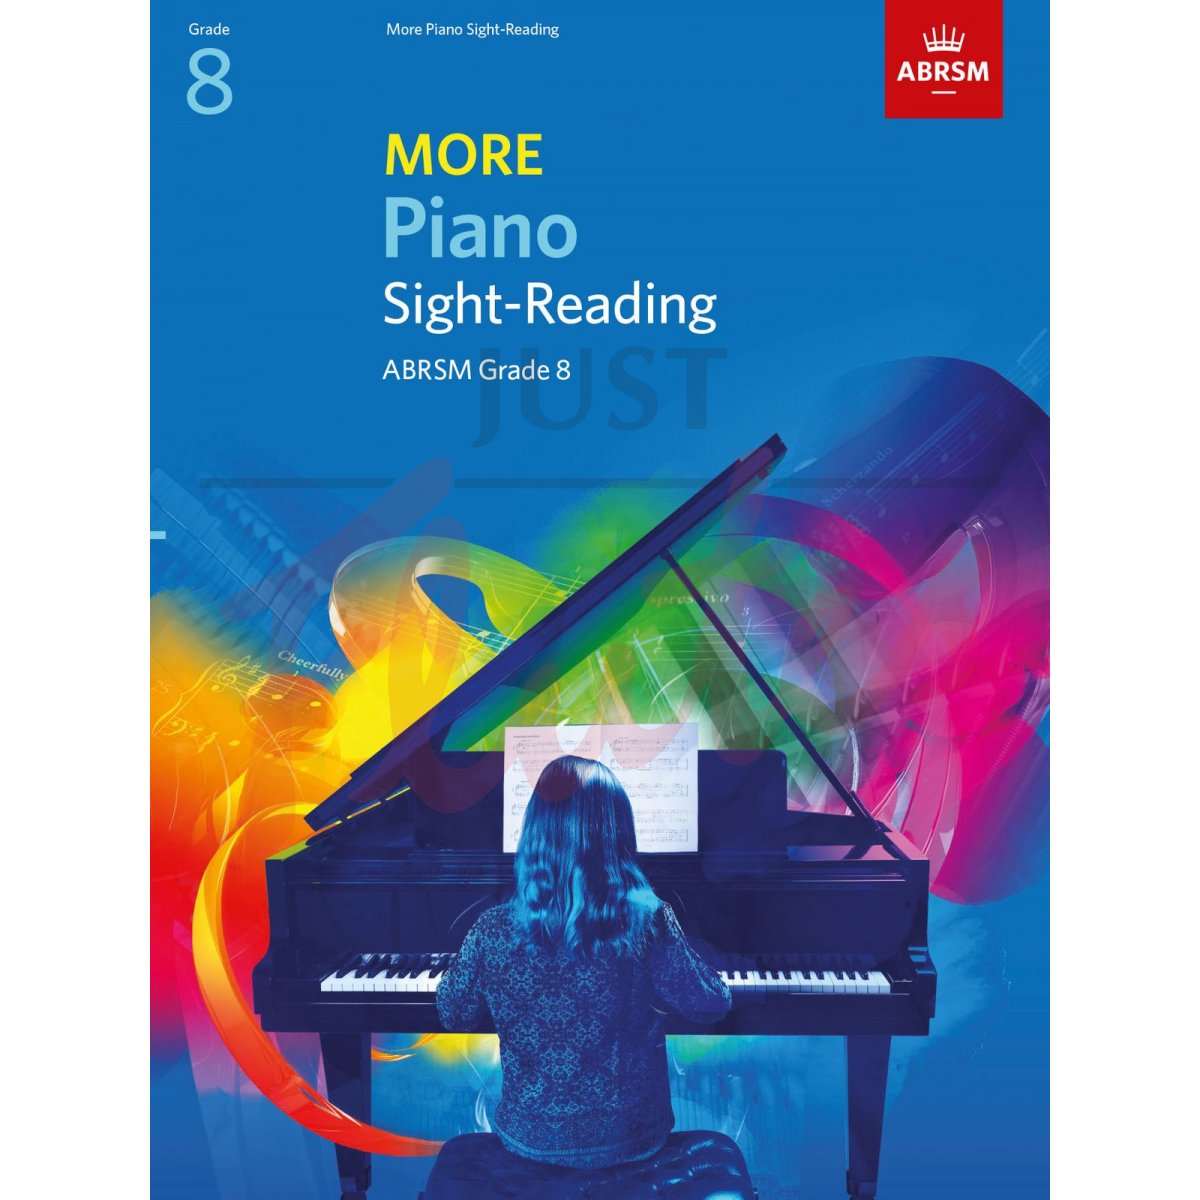 More Piano Sight-Reading Grade 8